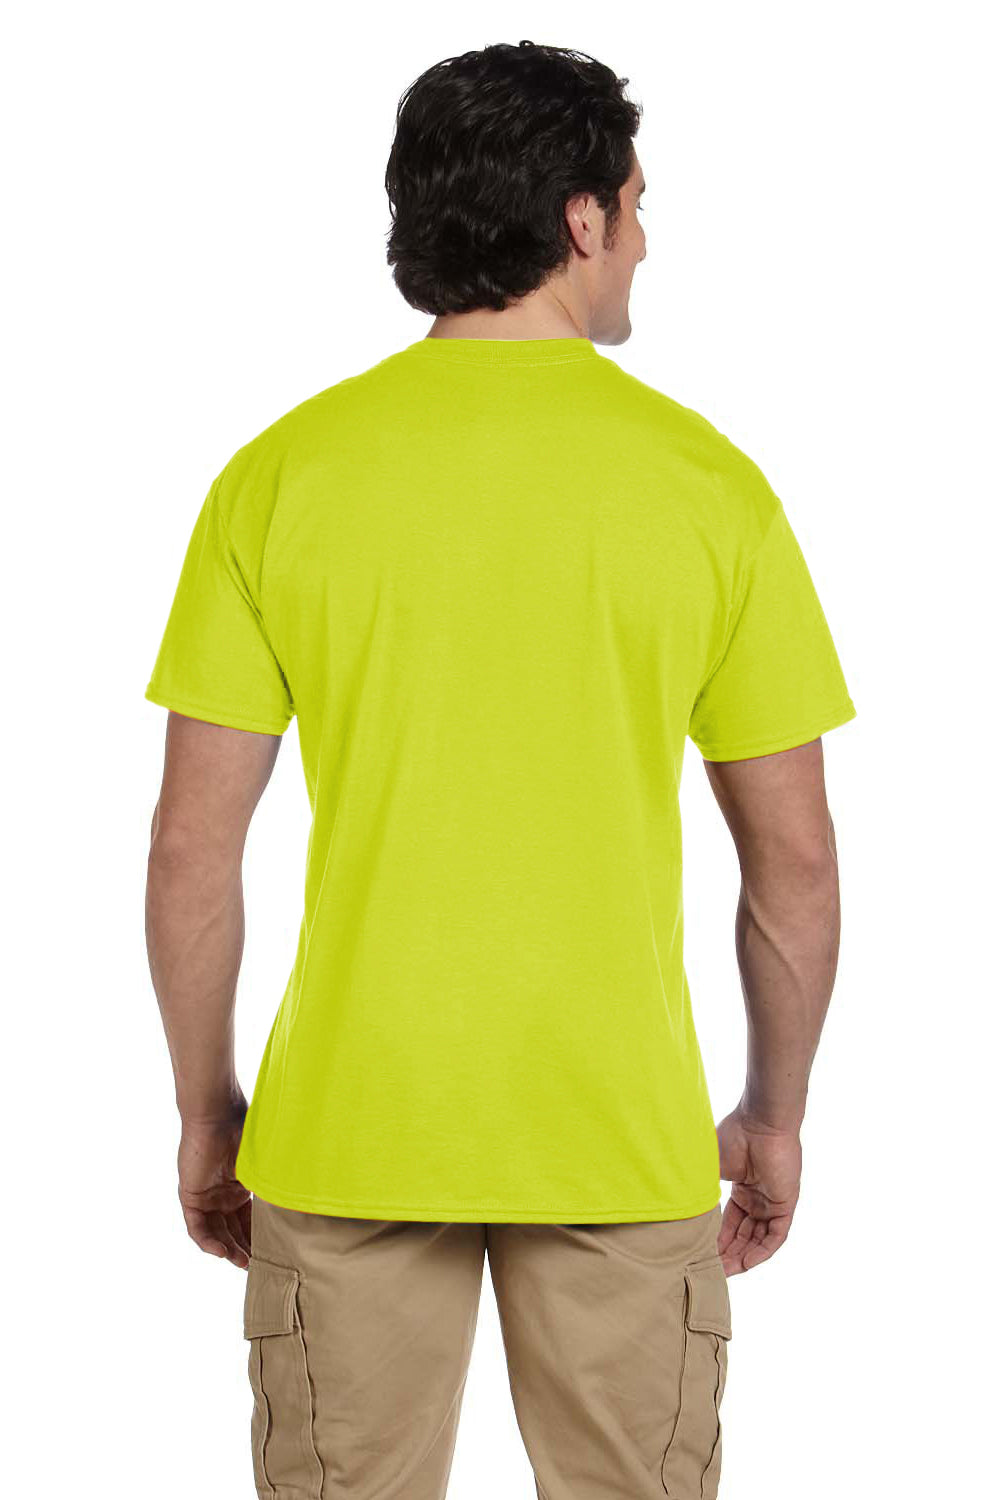 Gildan G830 Mens DryBlend Moisture Wicking Short Sleeve Crewneck T-Shirt w/ Pocket Safety Green Back